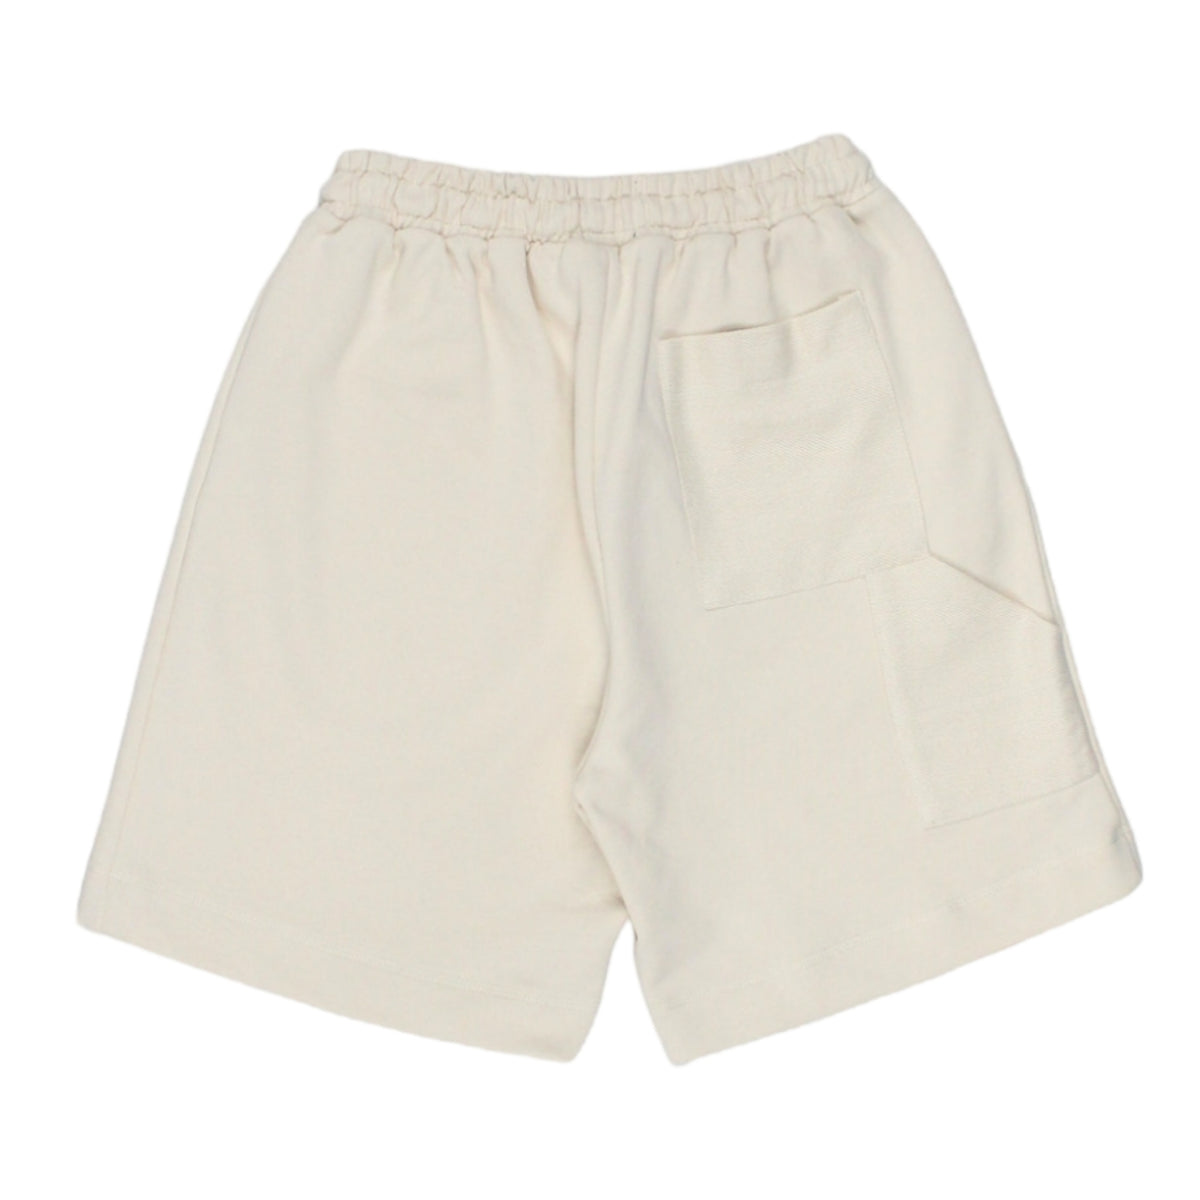 Boiler Room Cream Undyed Jersey Shorts